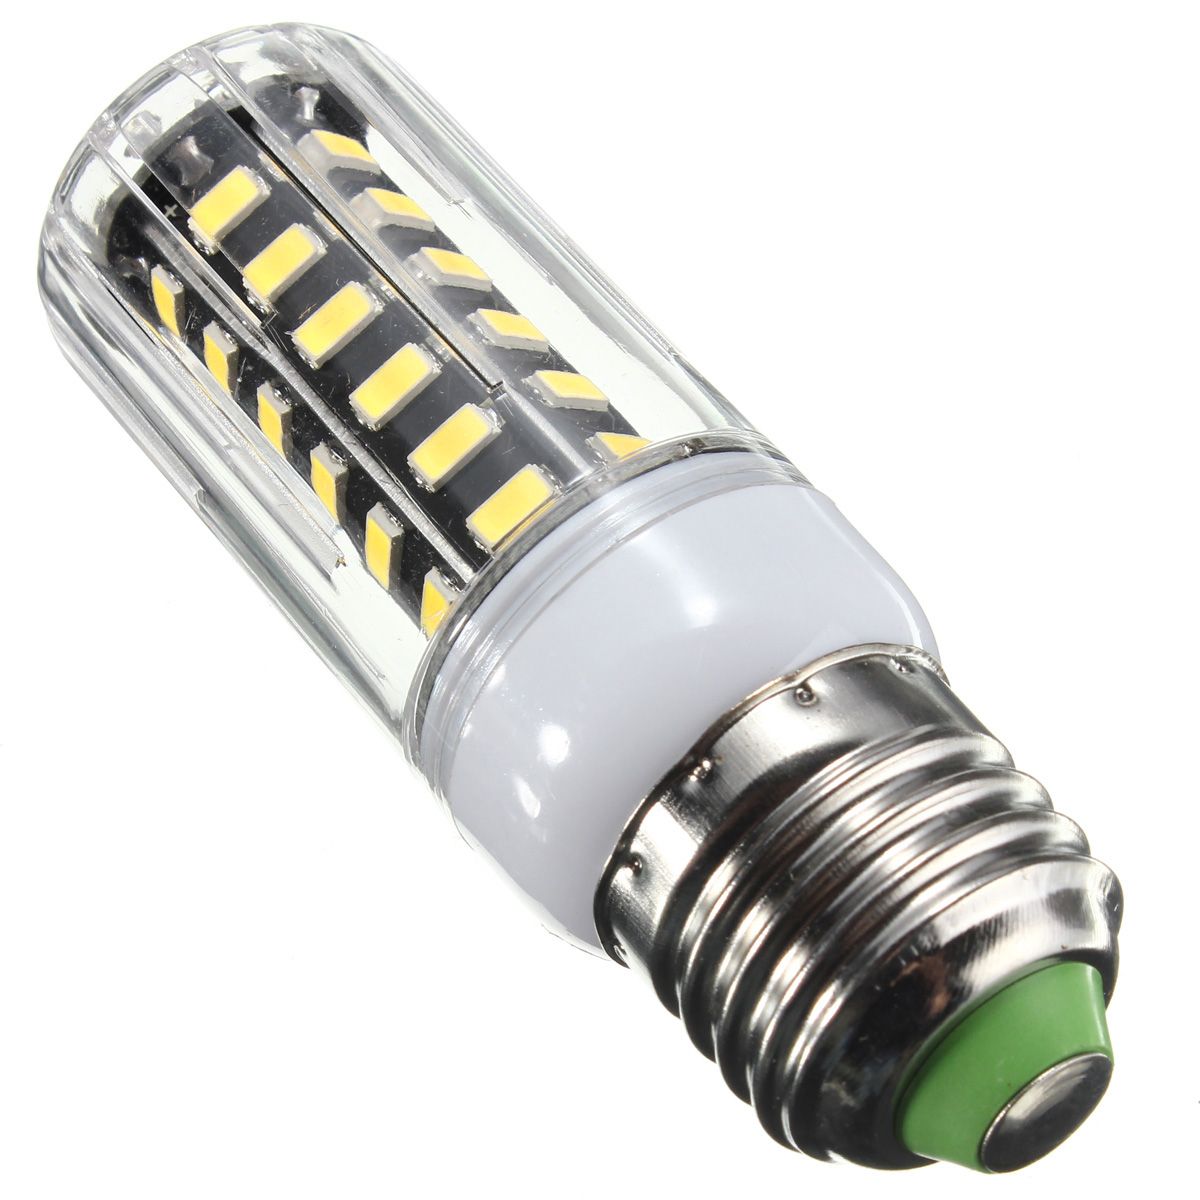 G9-E14-B22-GU10-E27-LED-5W-42-SMD-5733-LED-White-Warm-White-Cover-Corn-LED-Bulb-Light-AC-220V-1041207